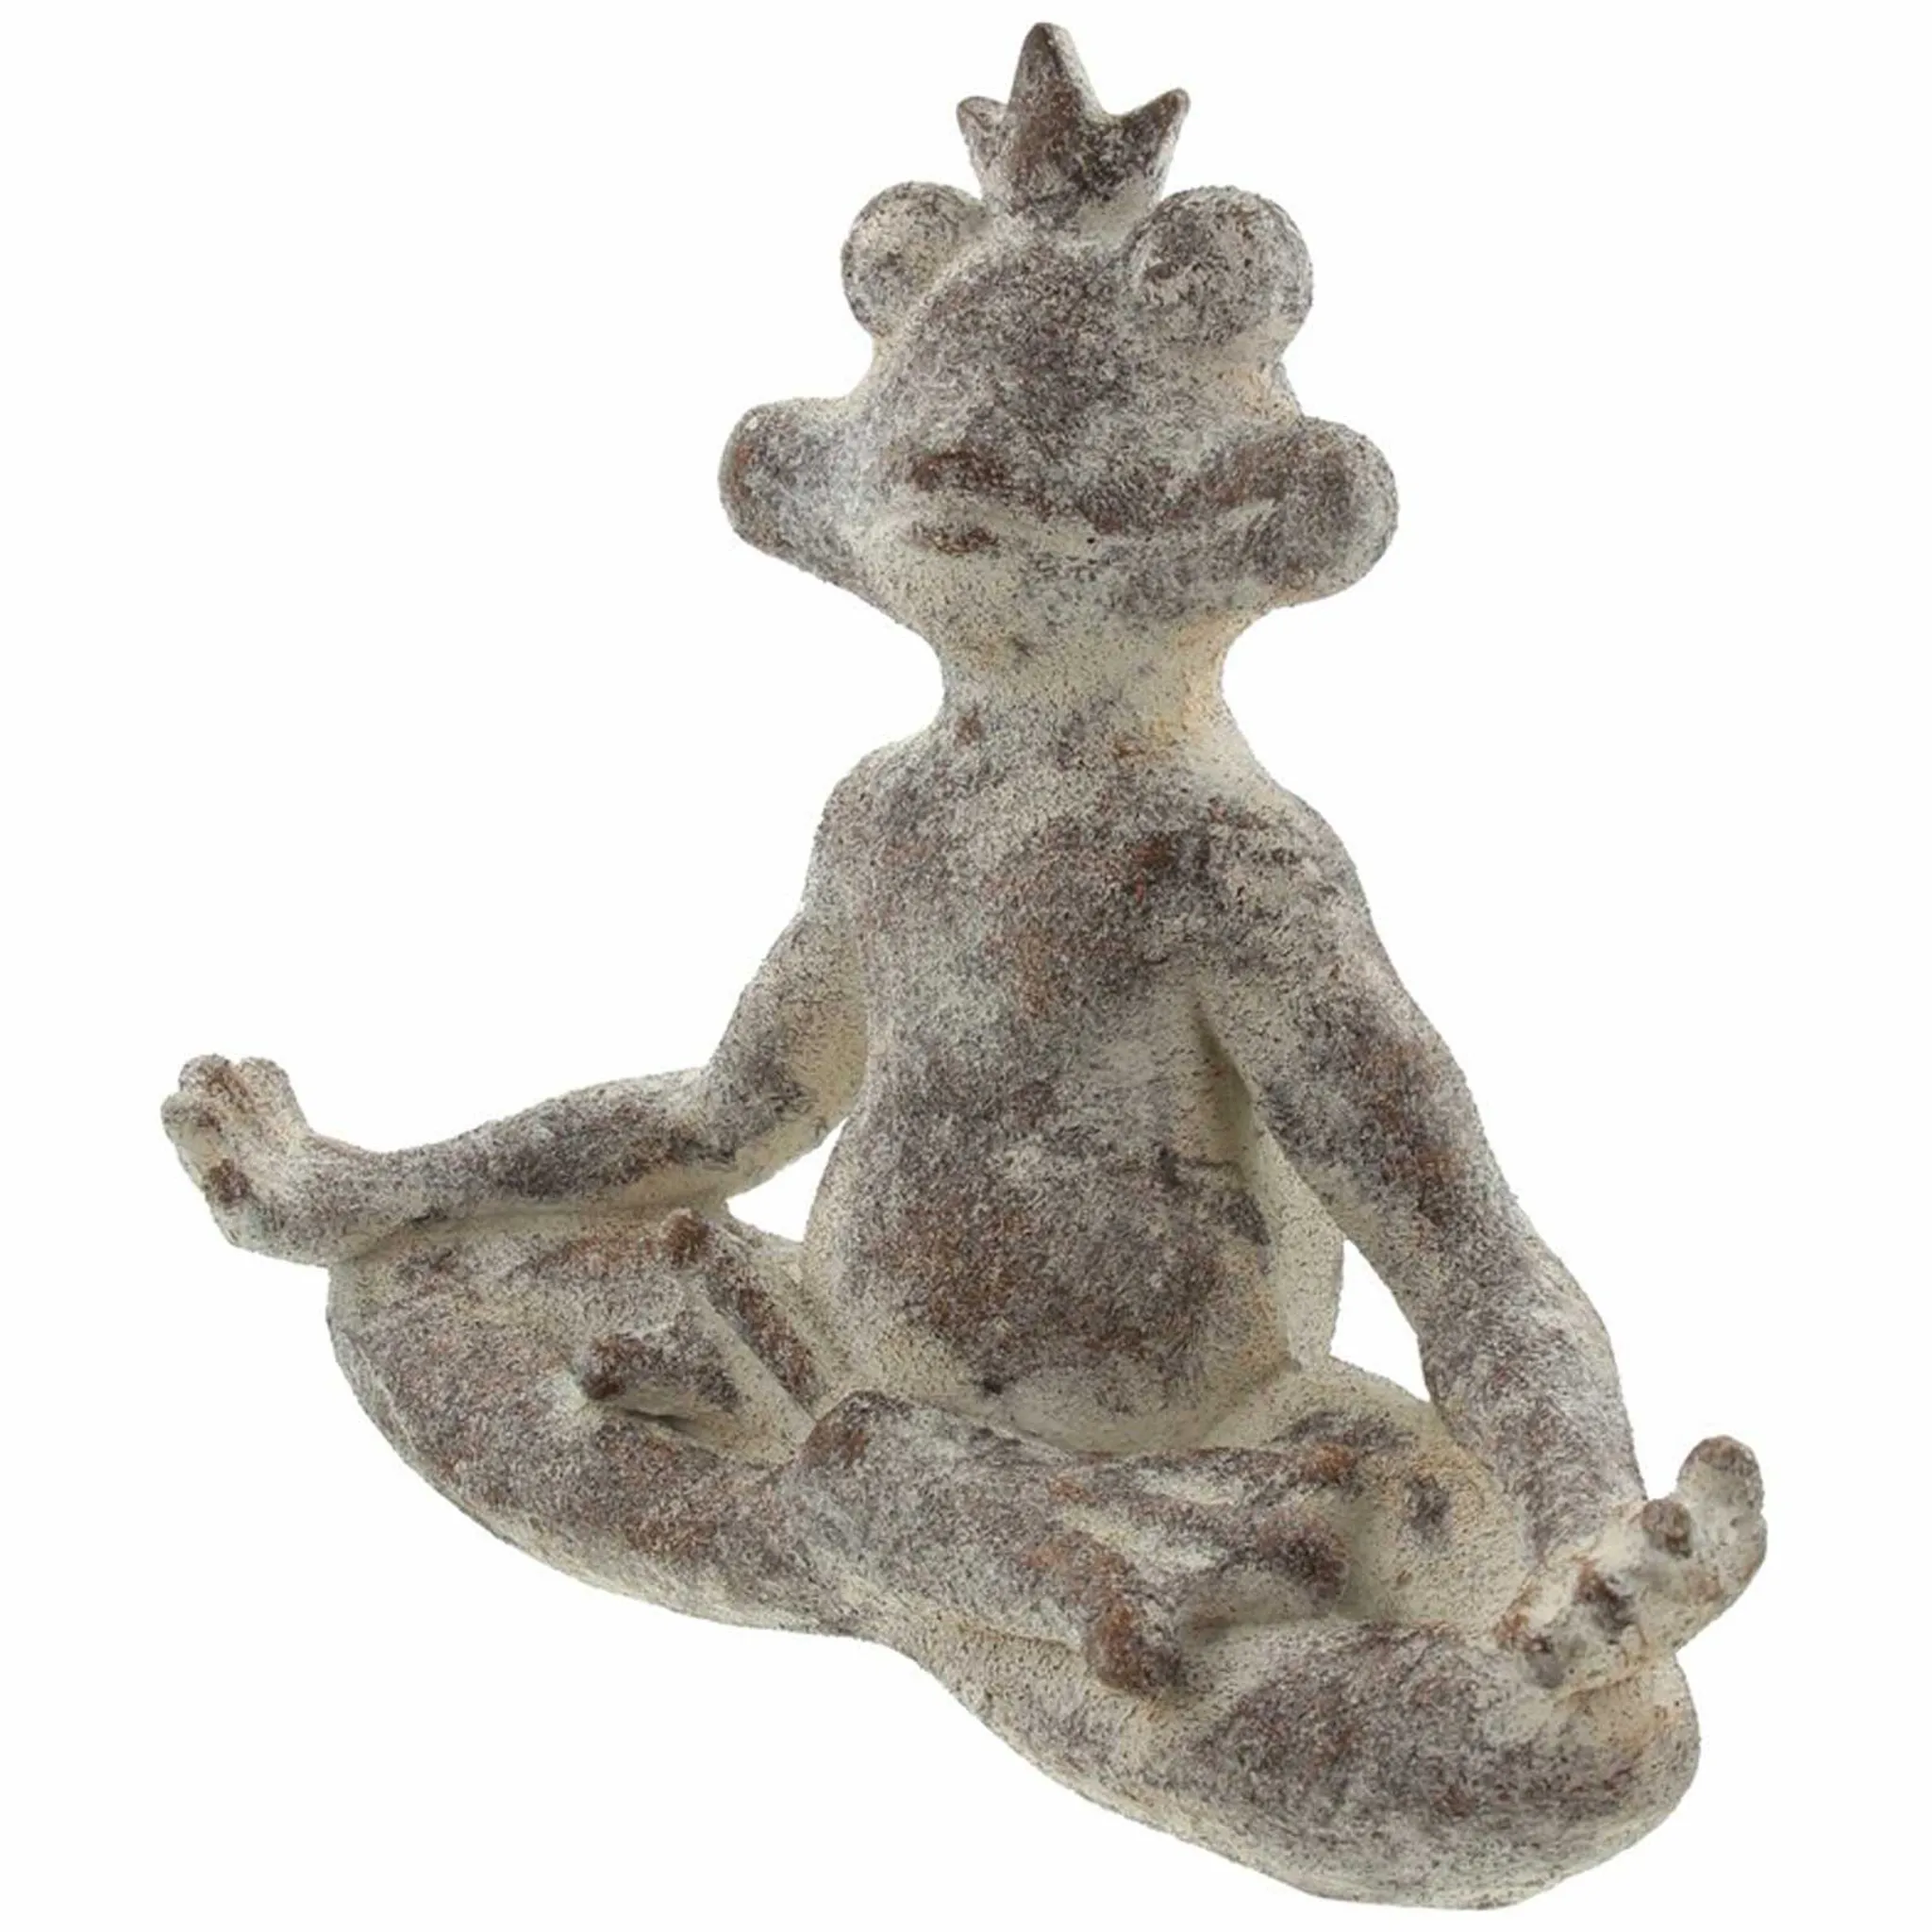 SIDCO Frosch Froschkönig Yoga Gartendeko